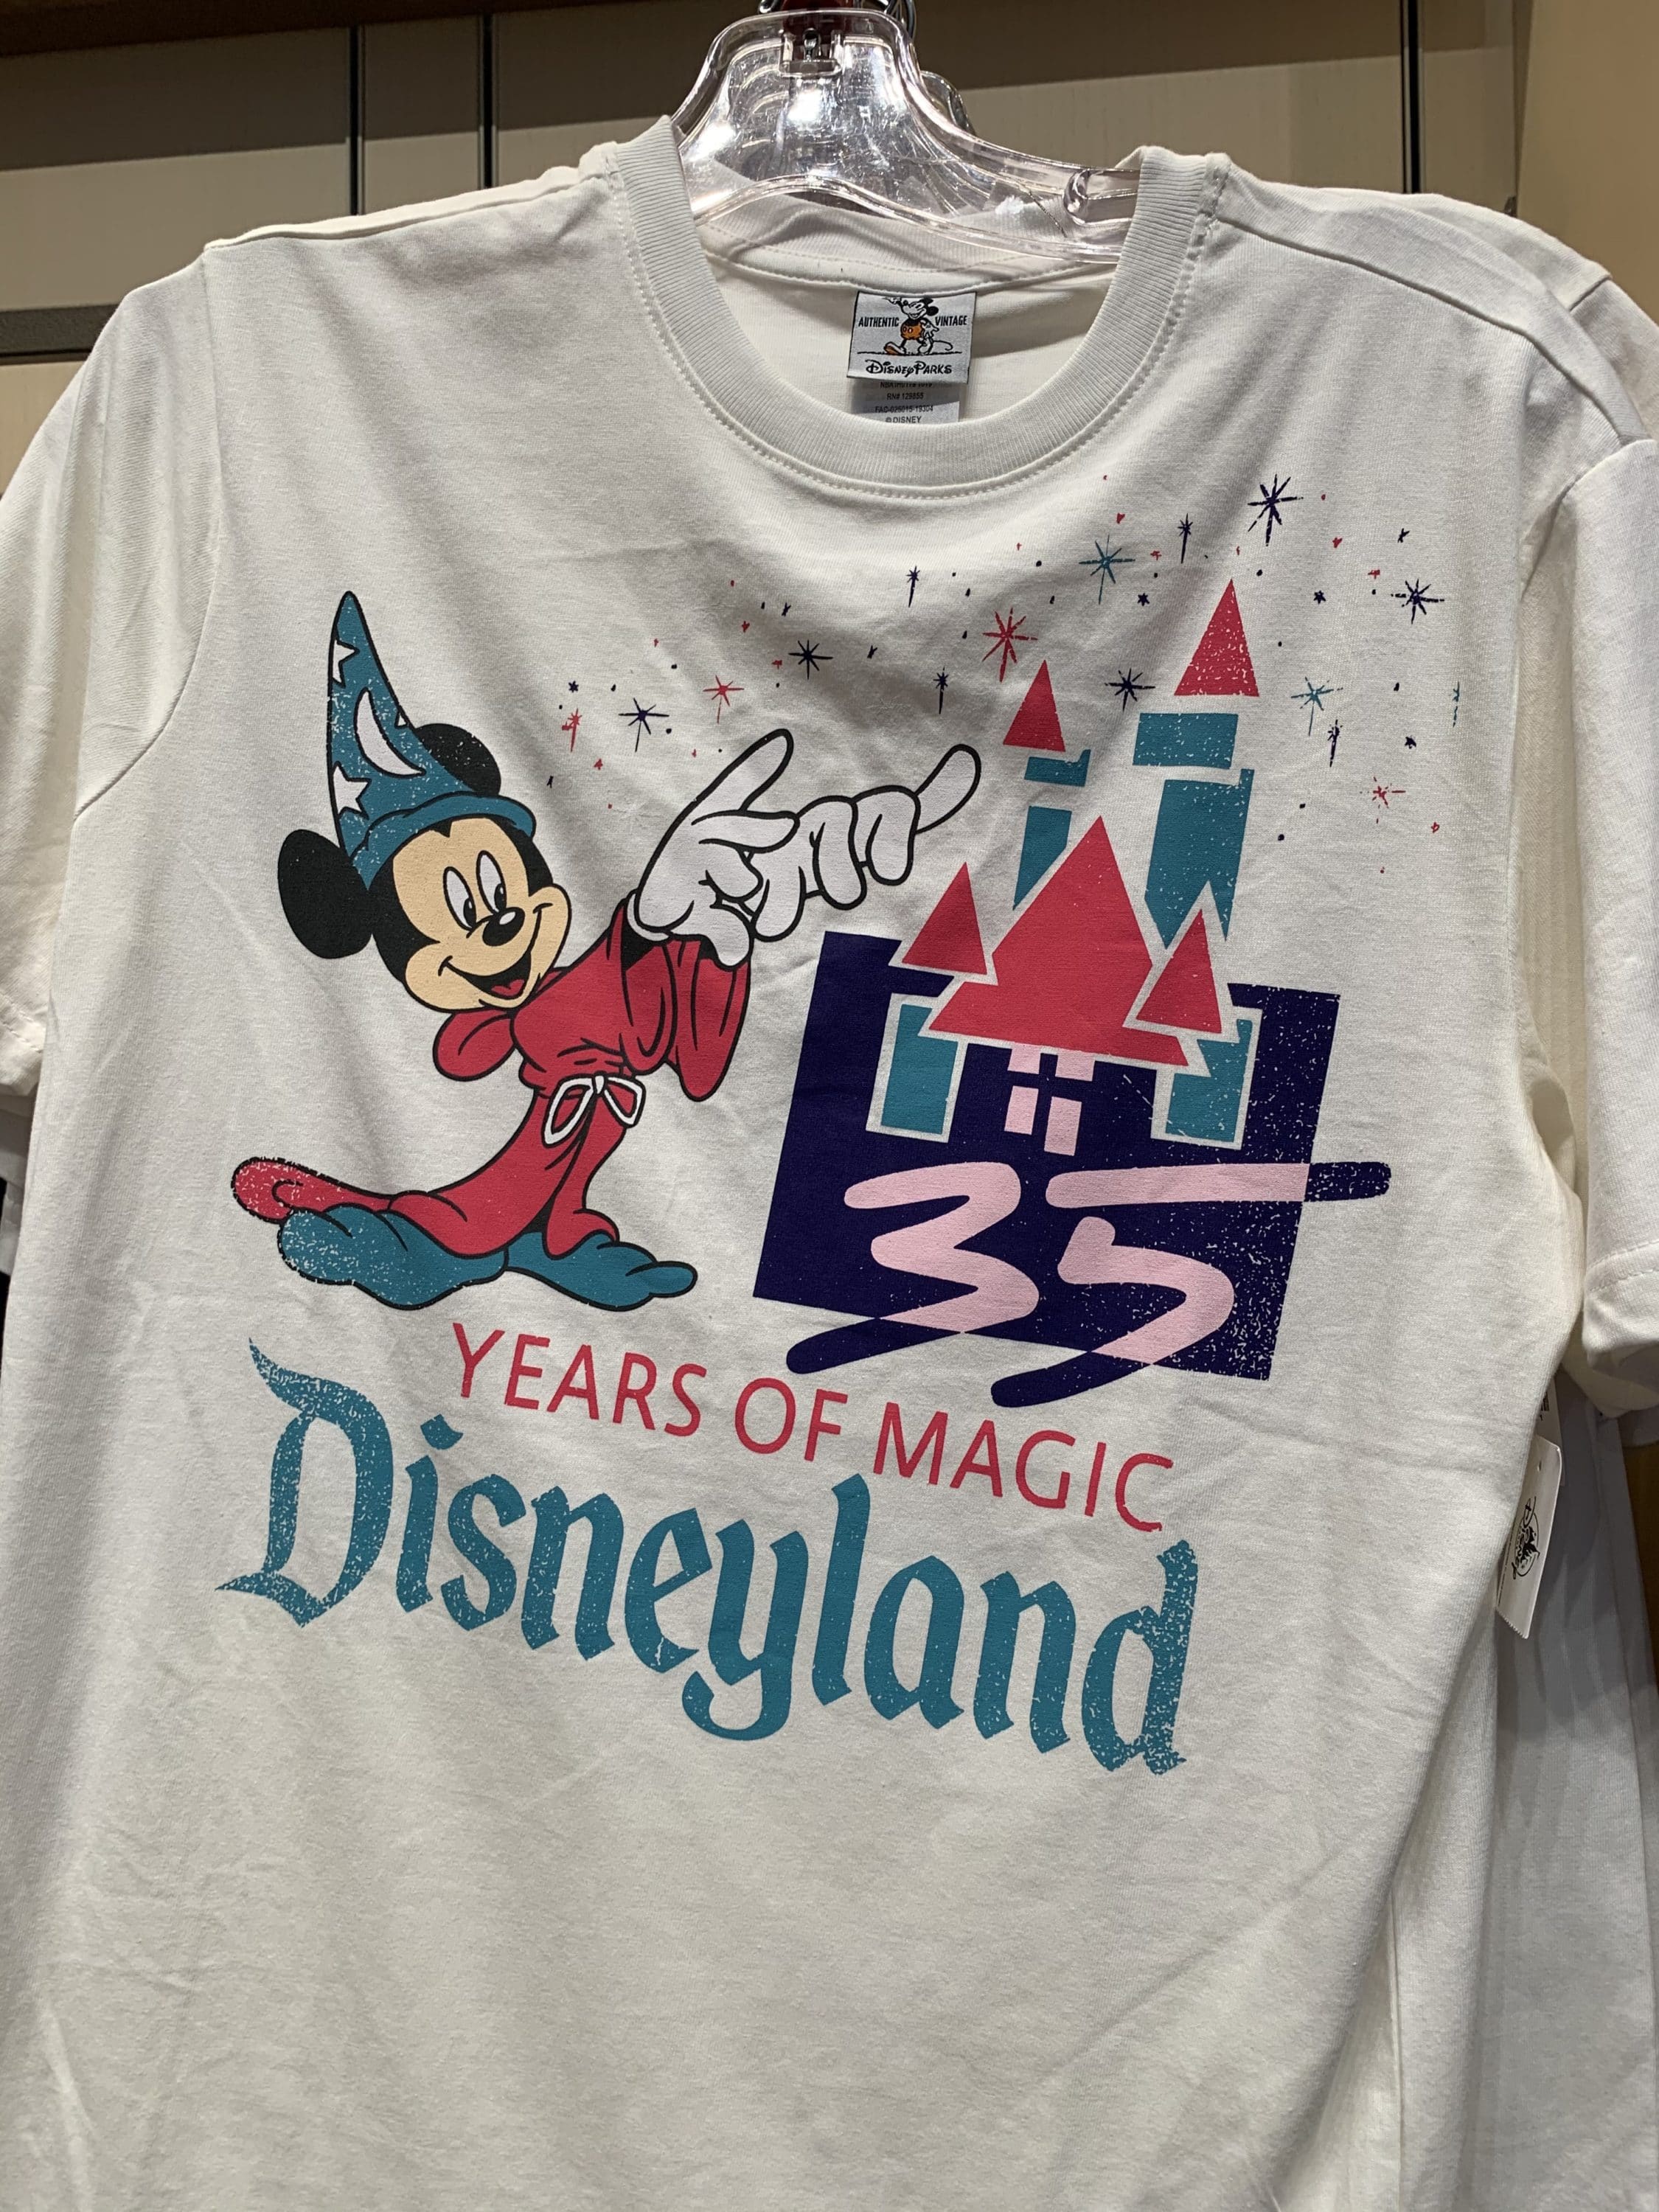 Disneyland 35th Anniversary Merchandise - World of Disney